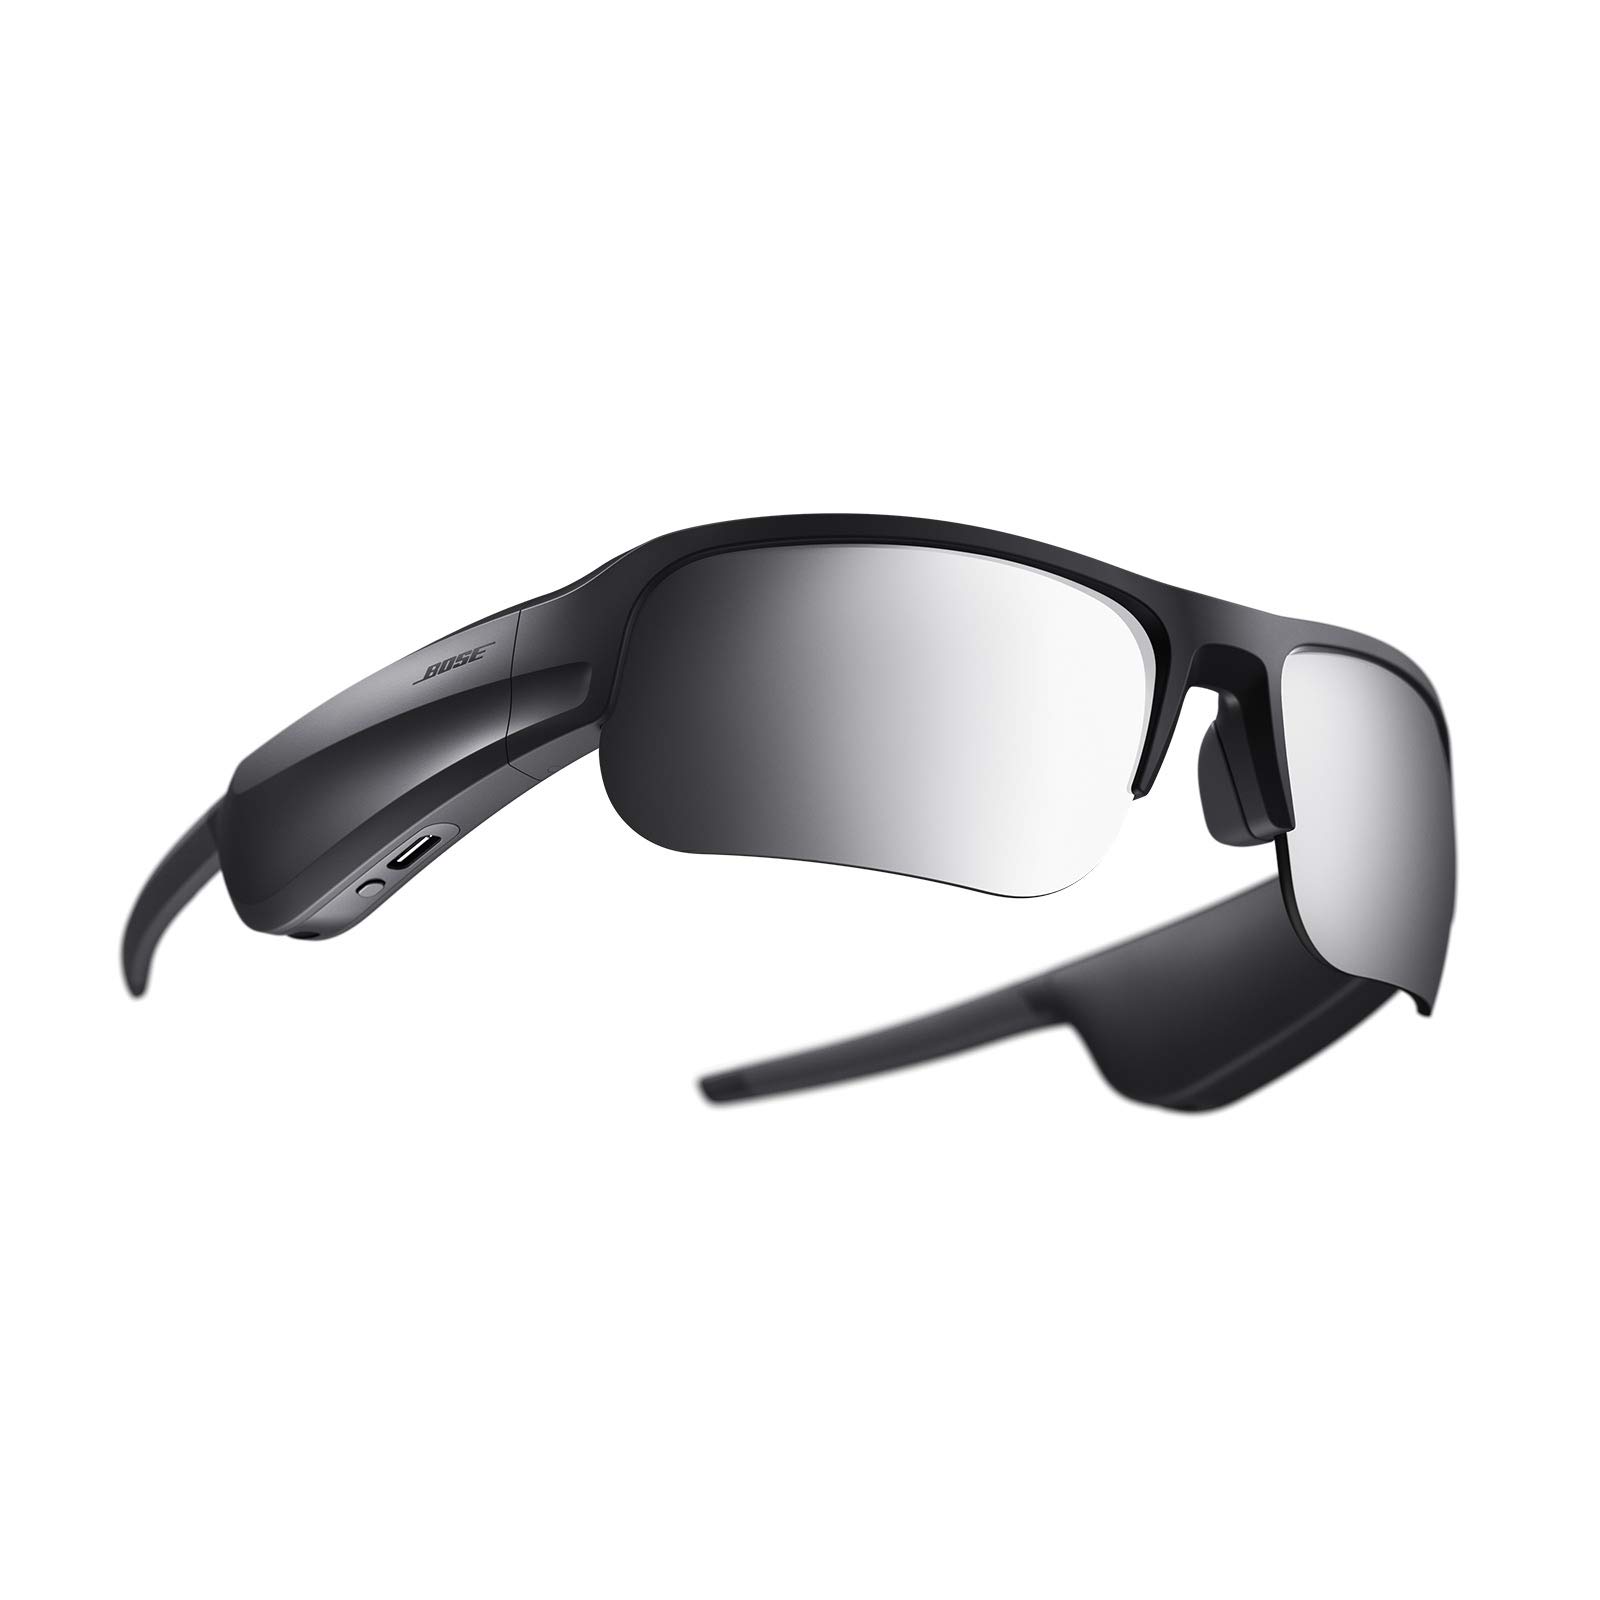 BOSE Frames Tempo - Sports Sunglasses with Polarized Le...